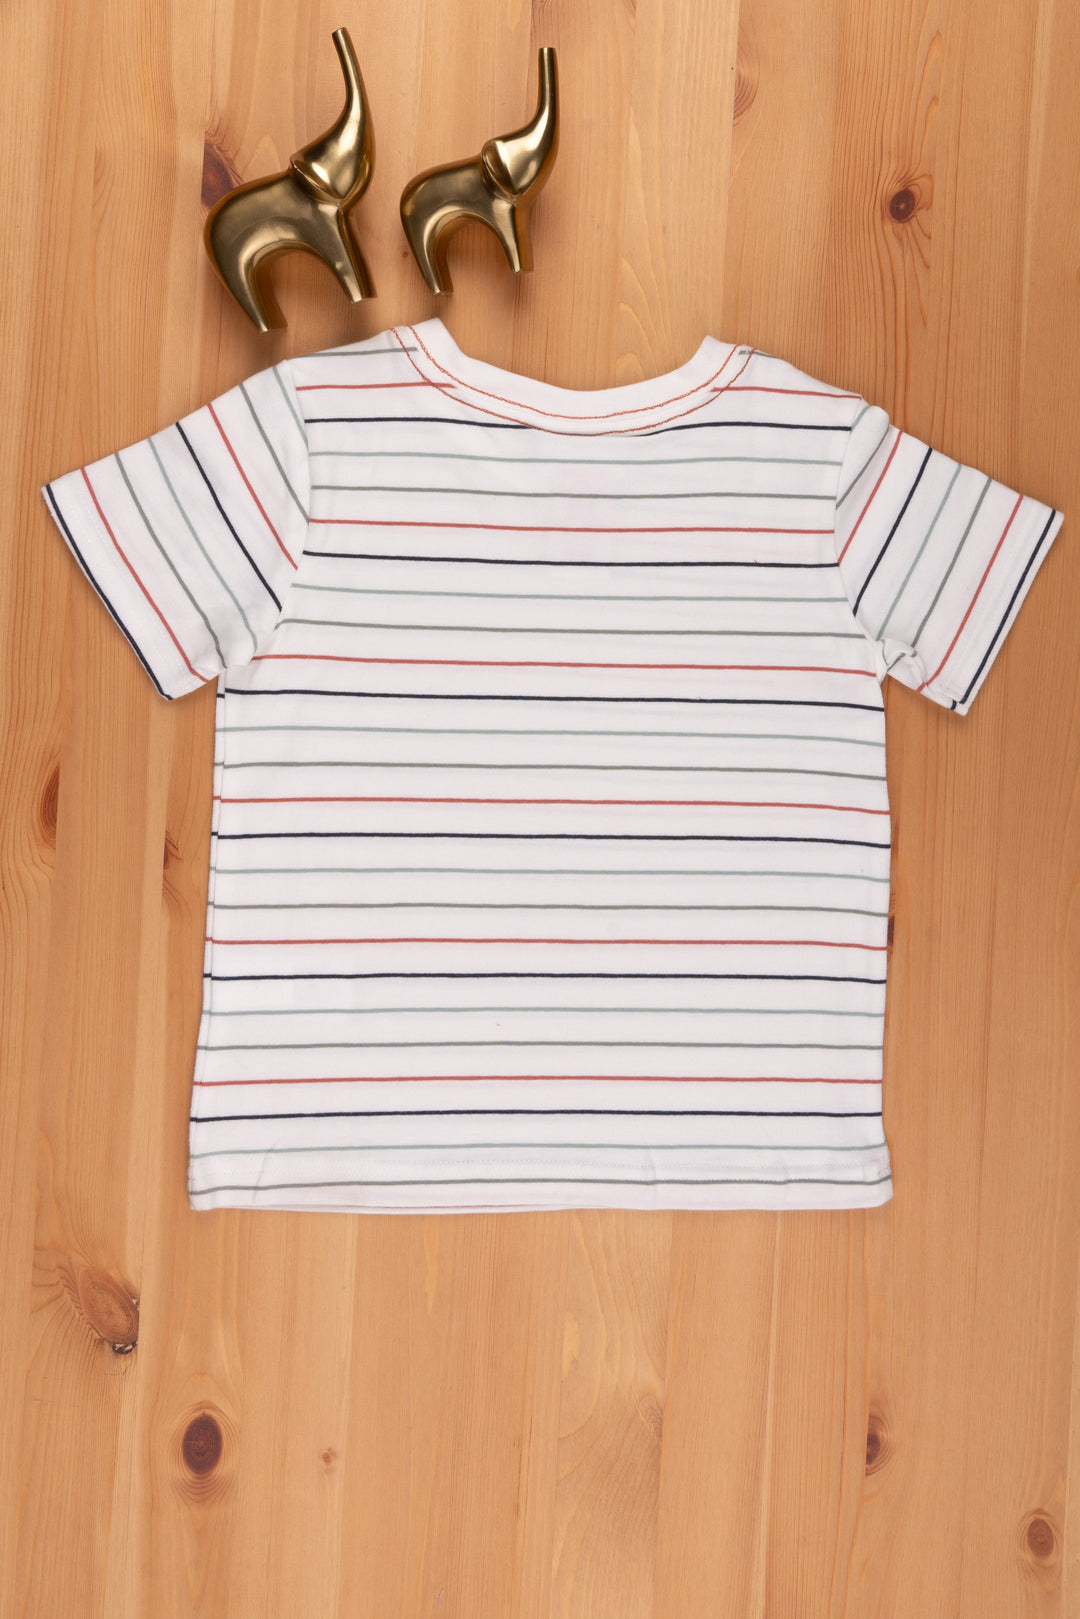 The Nesavu Boys T Shirt Versatile Kids Unisex T-Shirt Everyday Style for Boys and Girls psr silks Nesavu